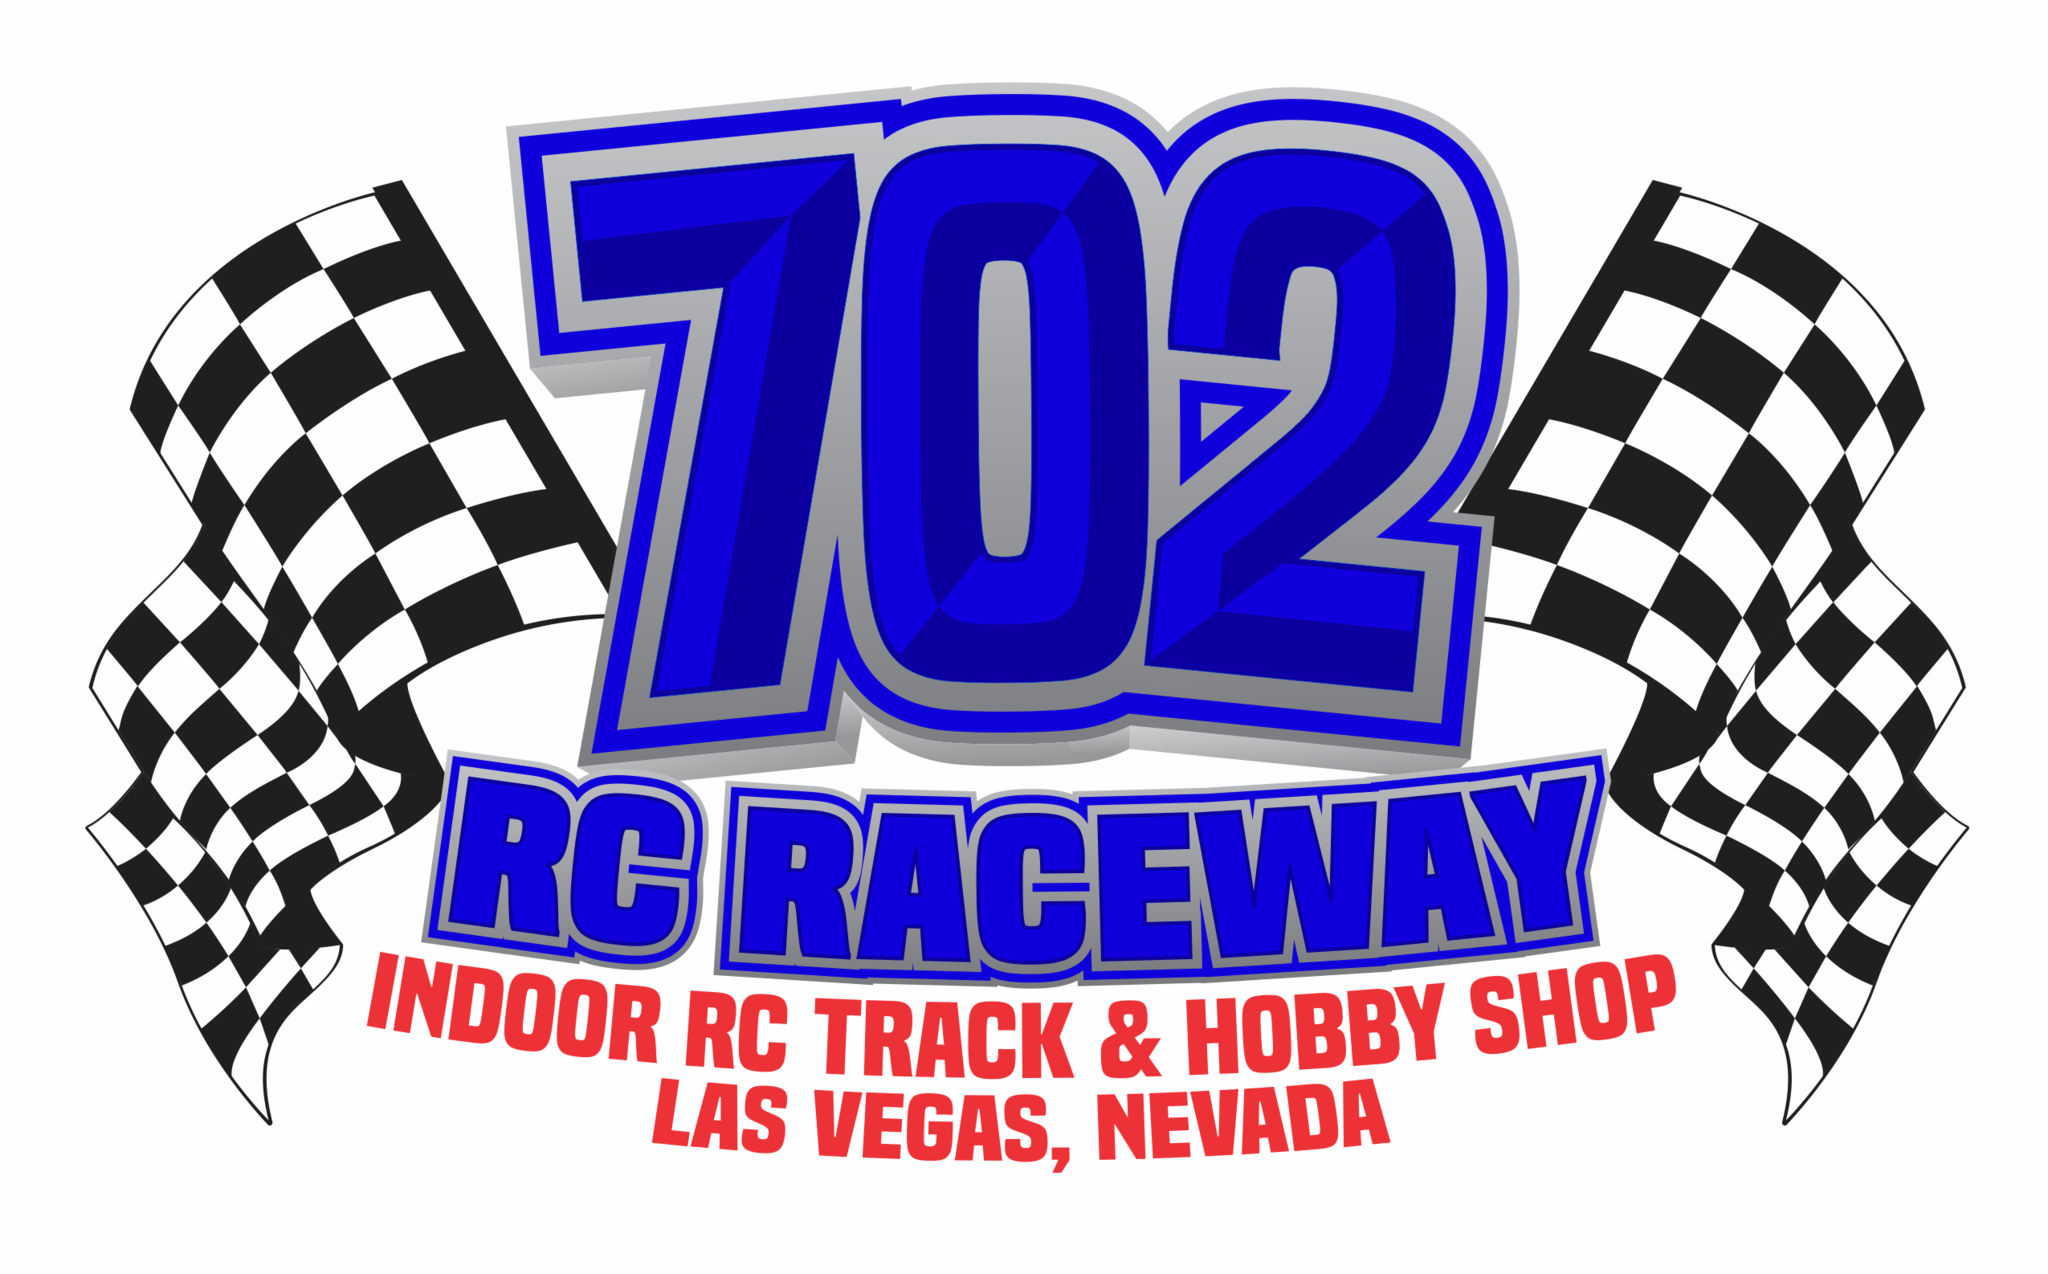 702 RC Raceway Track News: Week of Jun 22 - Jun 26